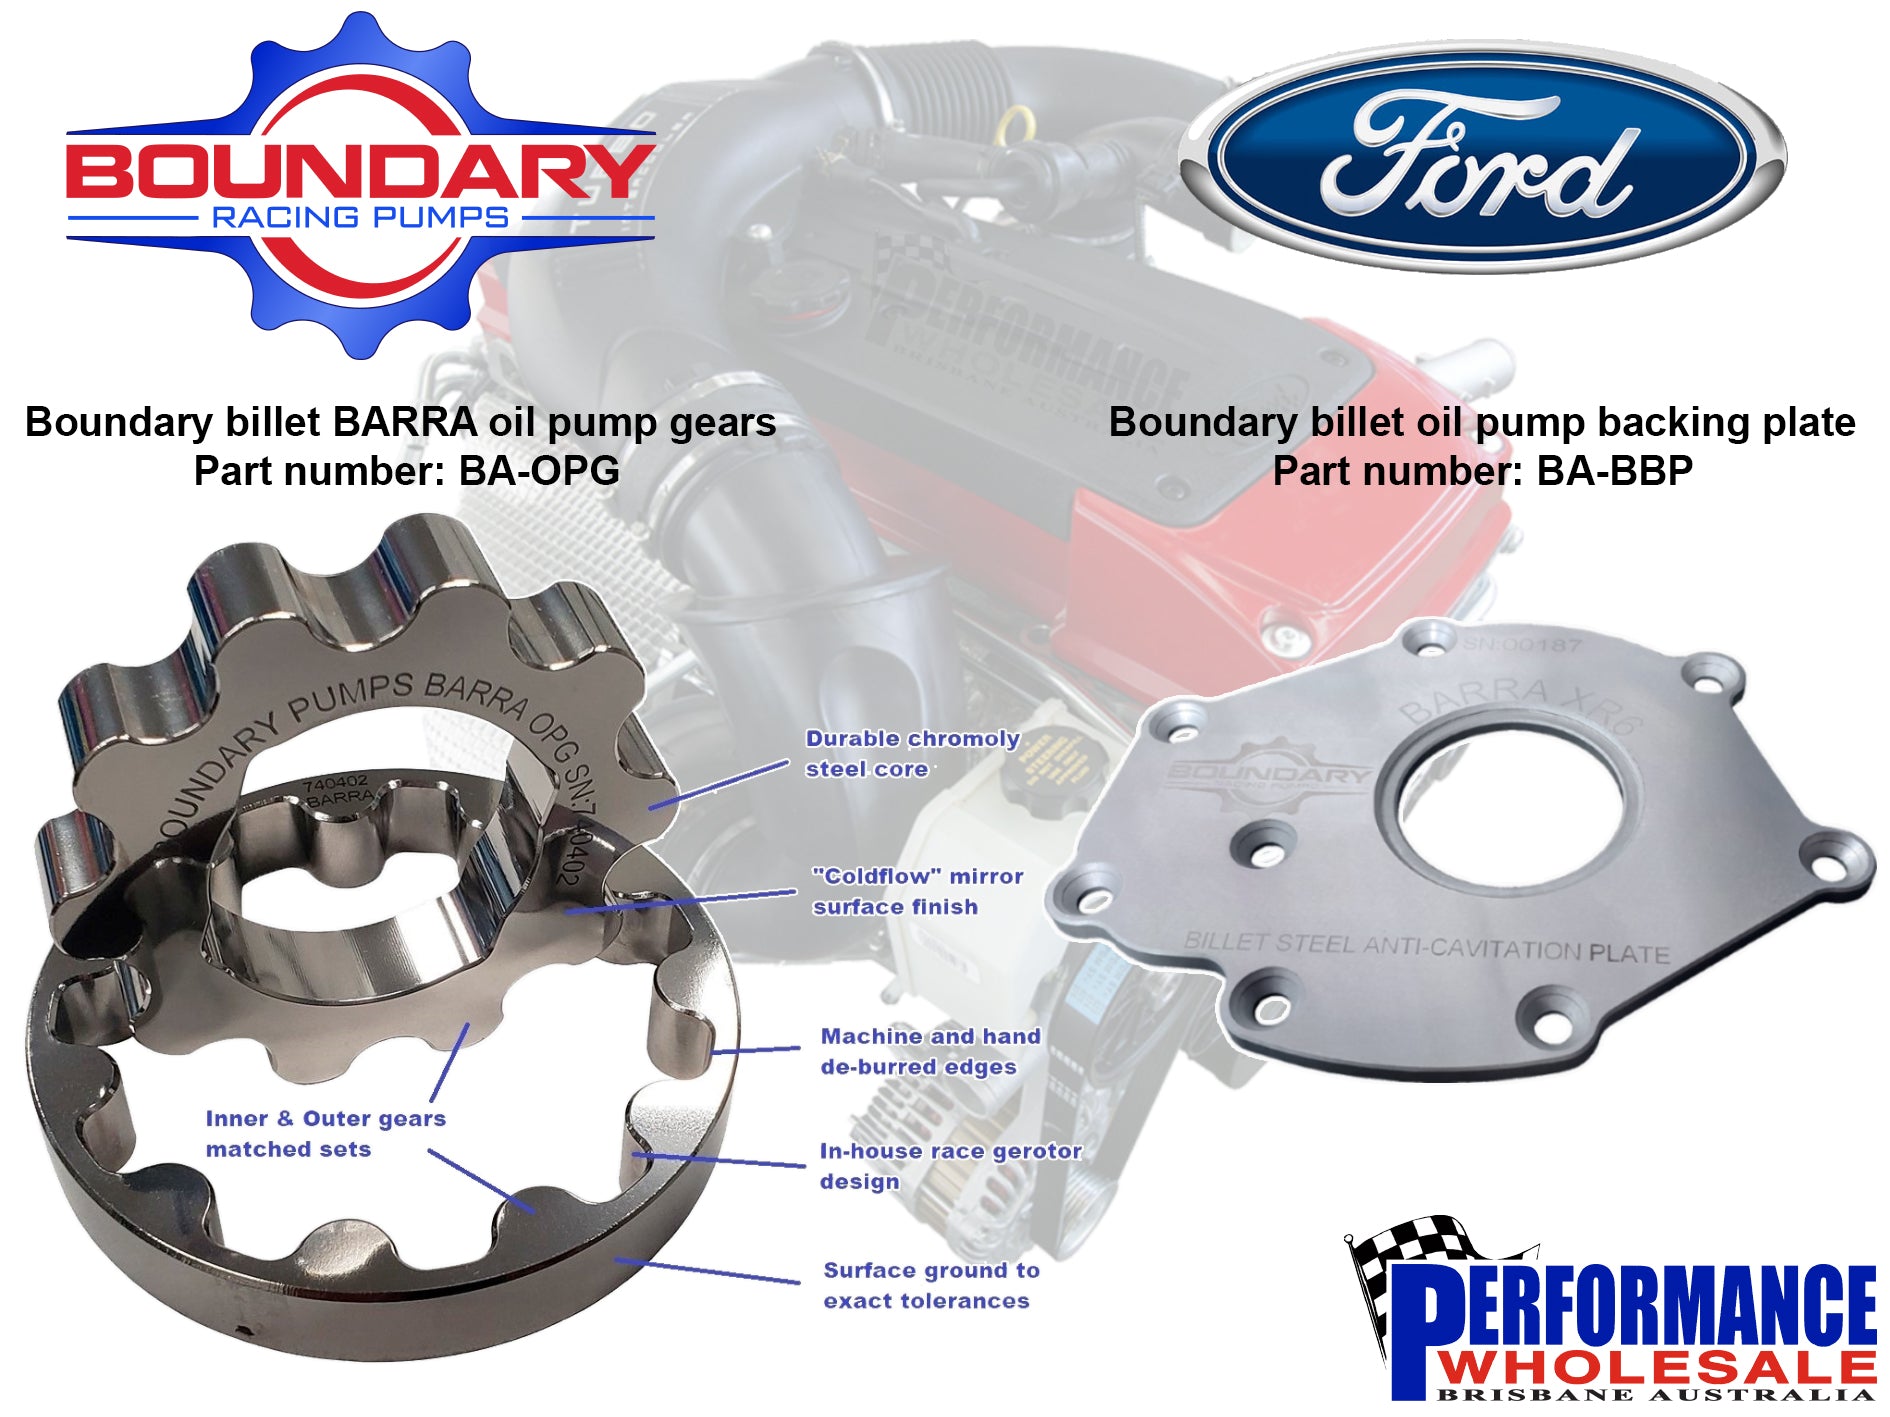 Boundary Barra oil pump gears & backing plate